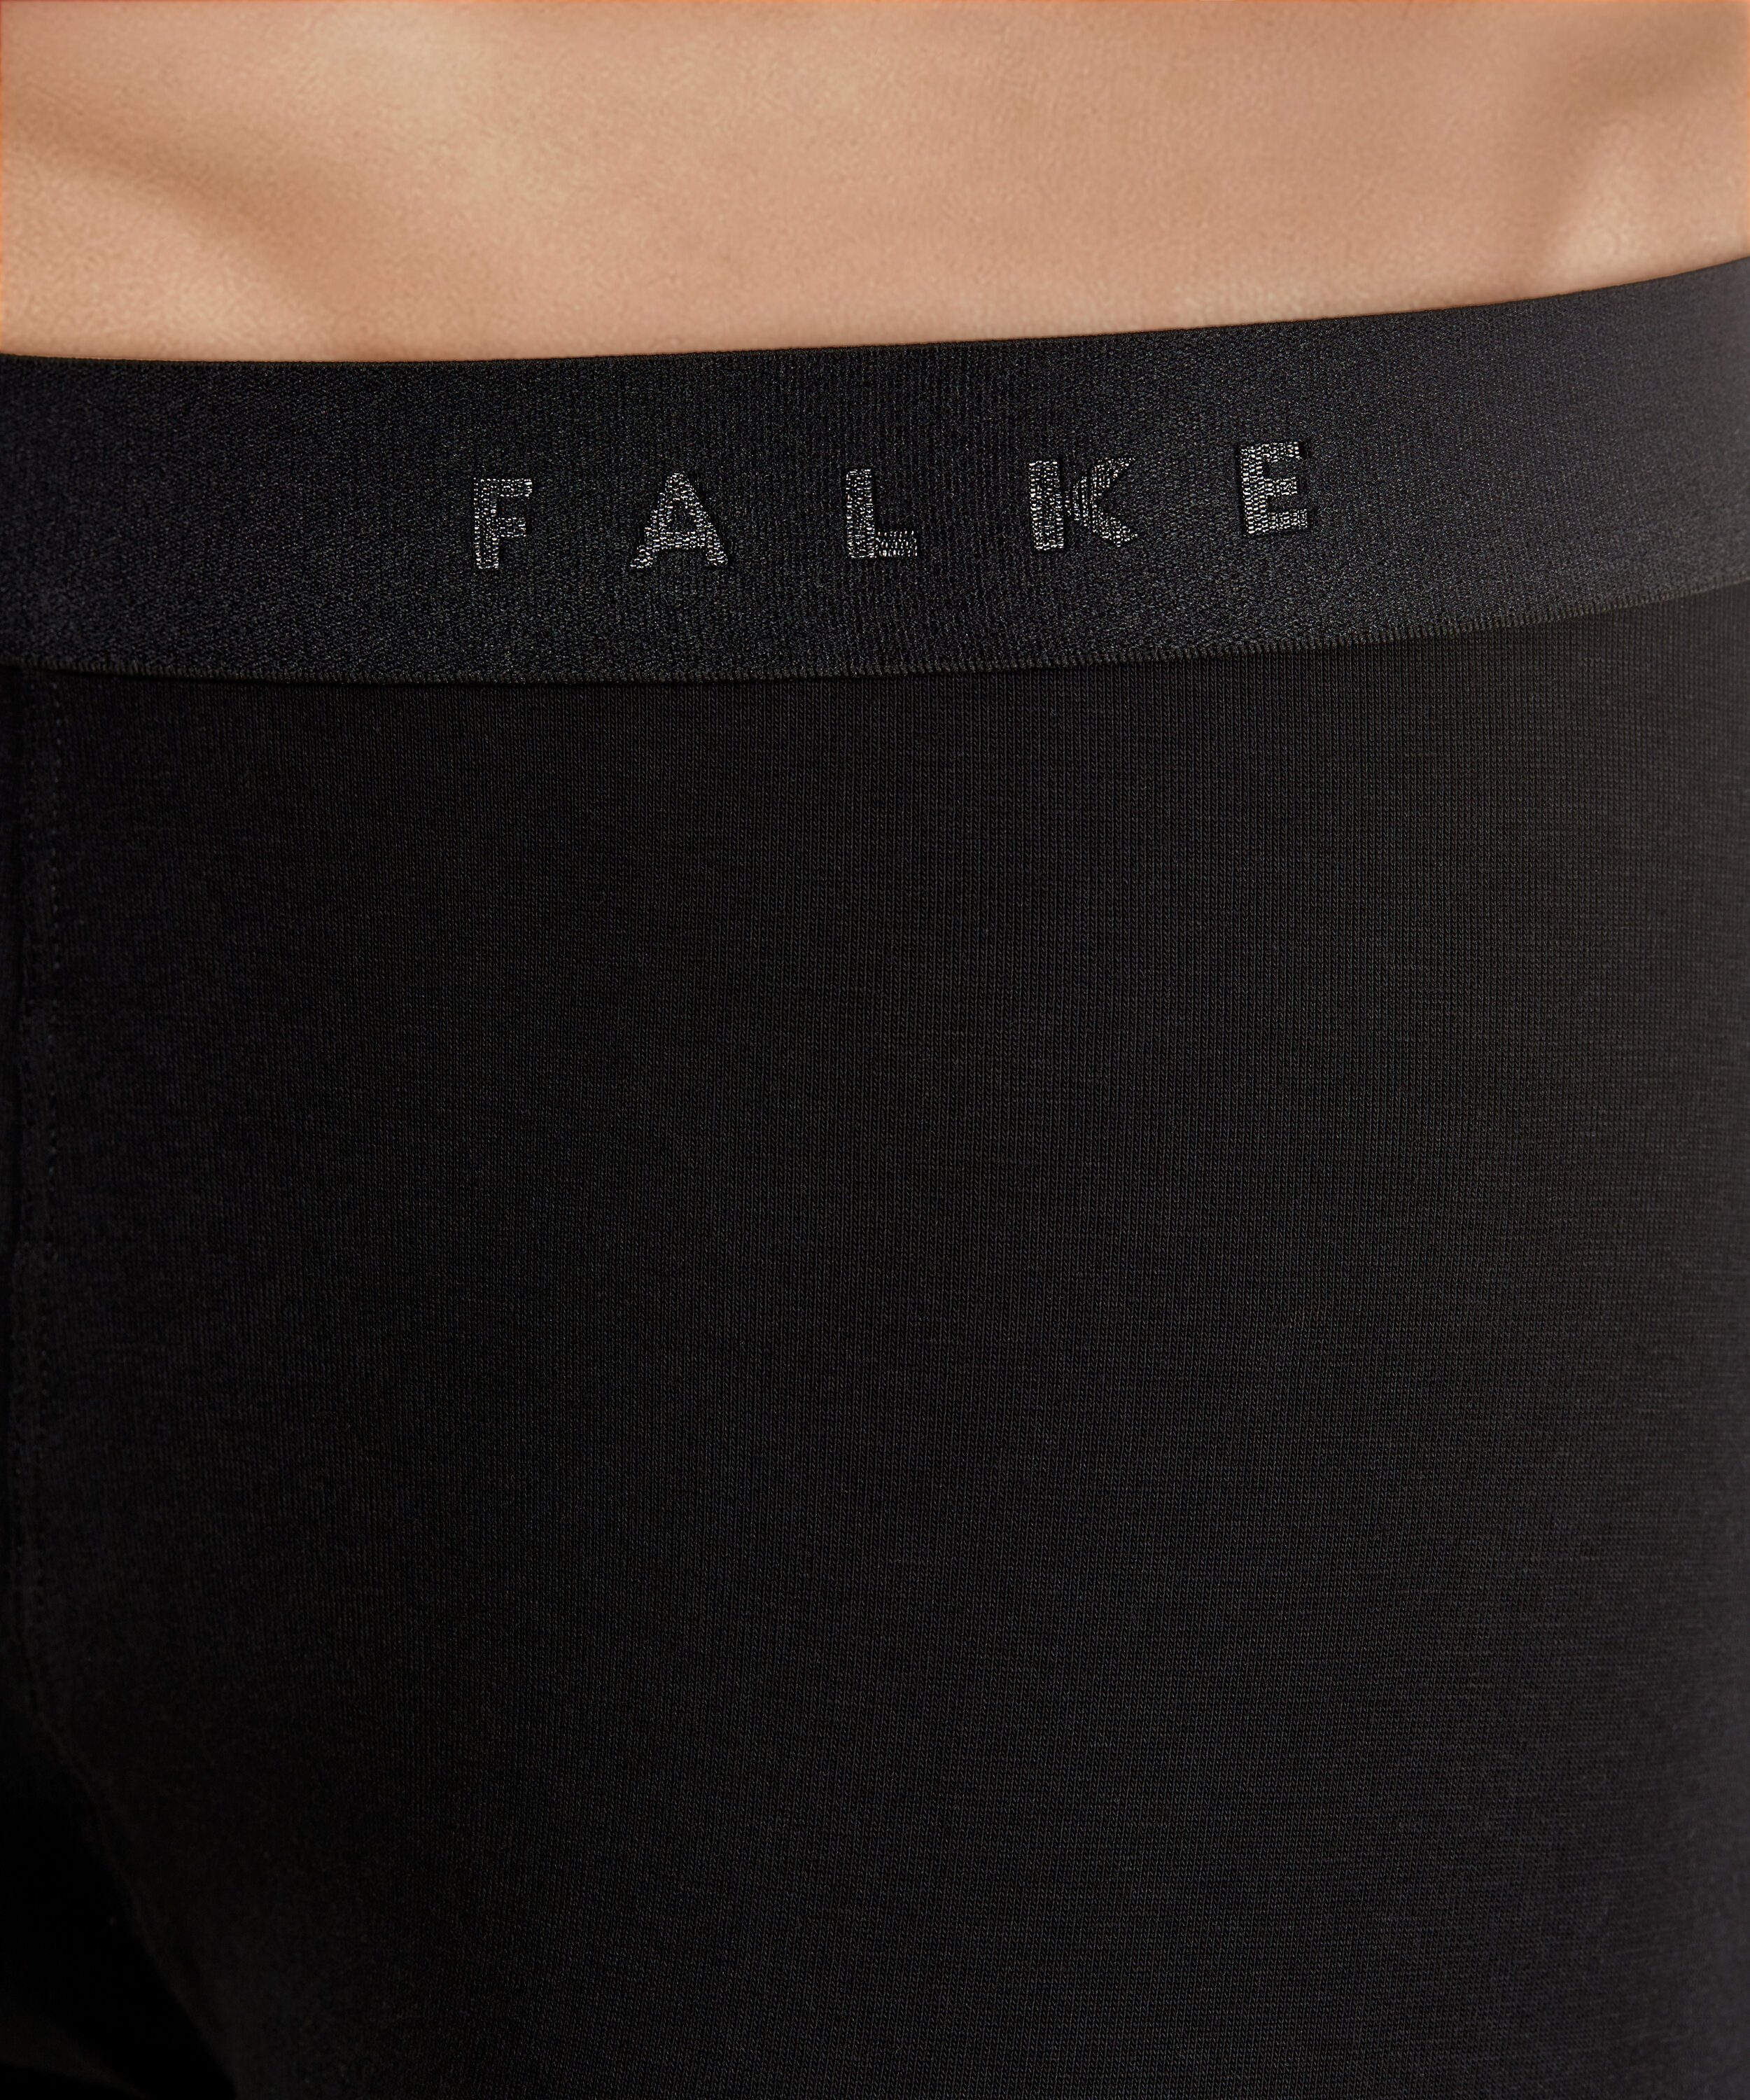 Elasthan FALKE 2-Pack Boxershorts Softe black (3000) (2-St) mit Baumwolle